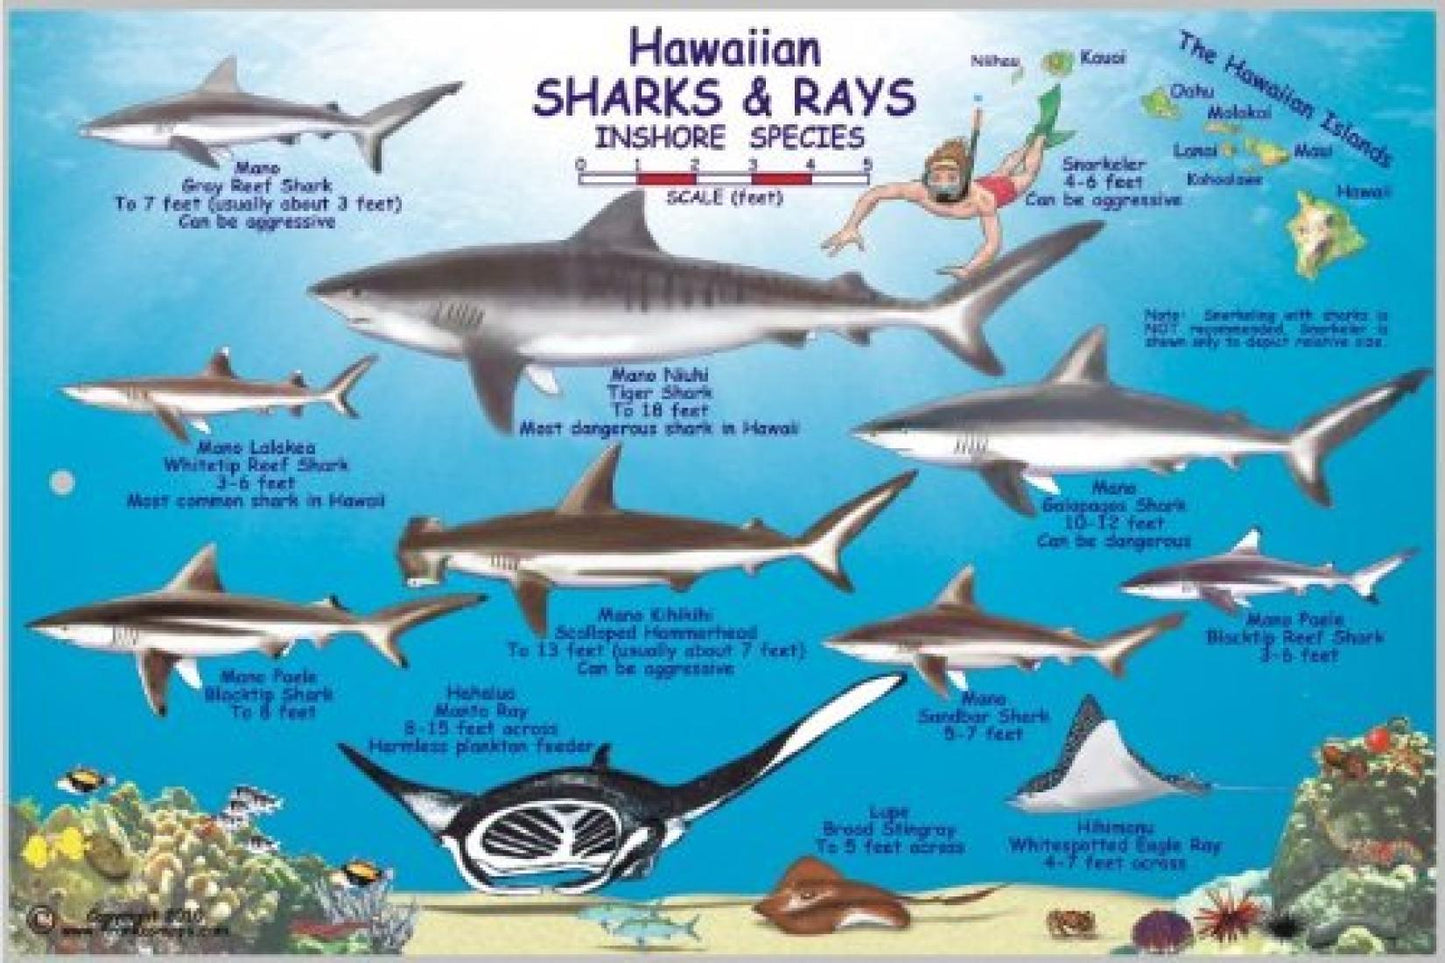 Hawaiian Sharks and Rays Offshore Species